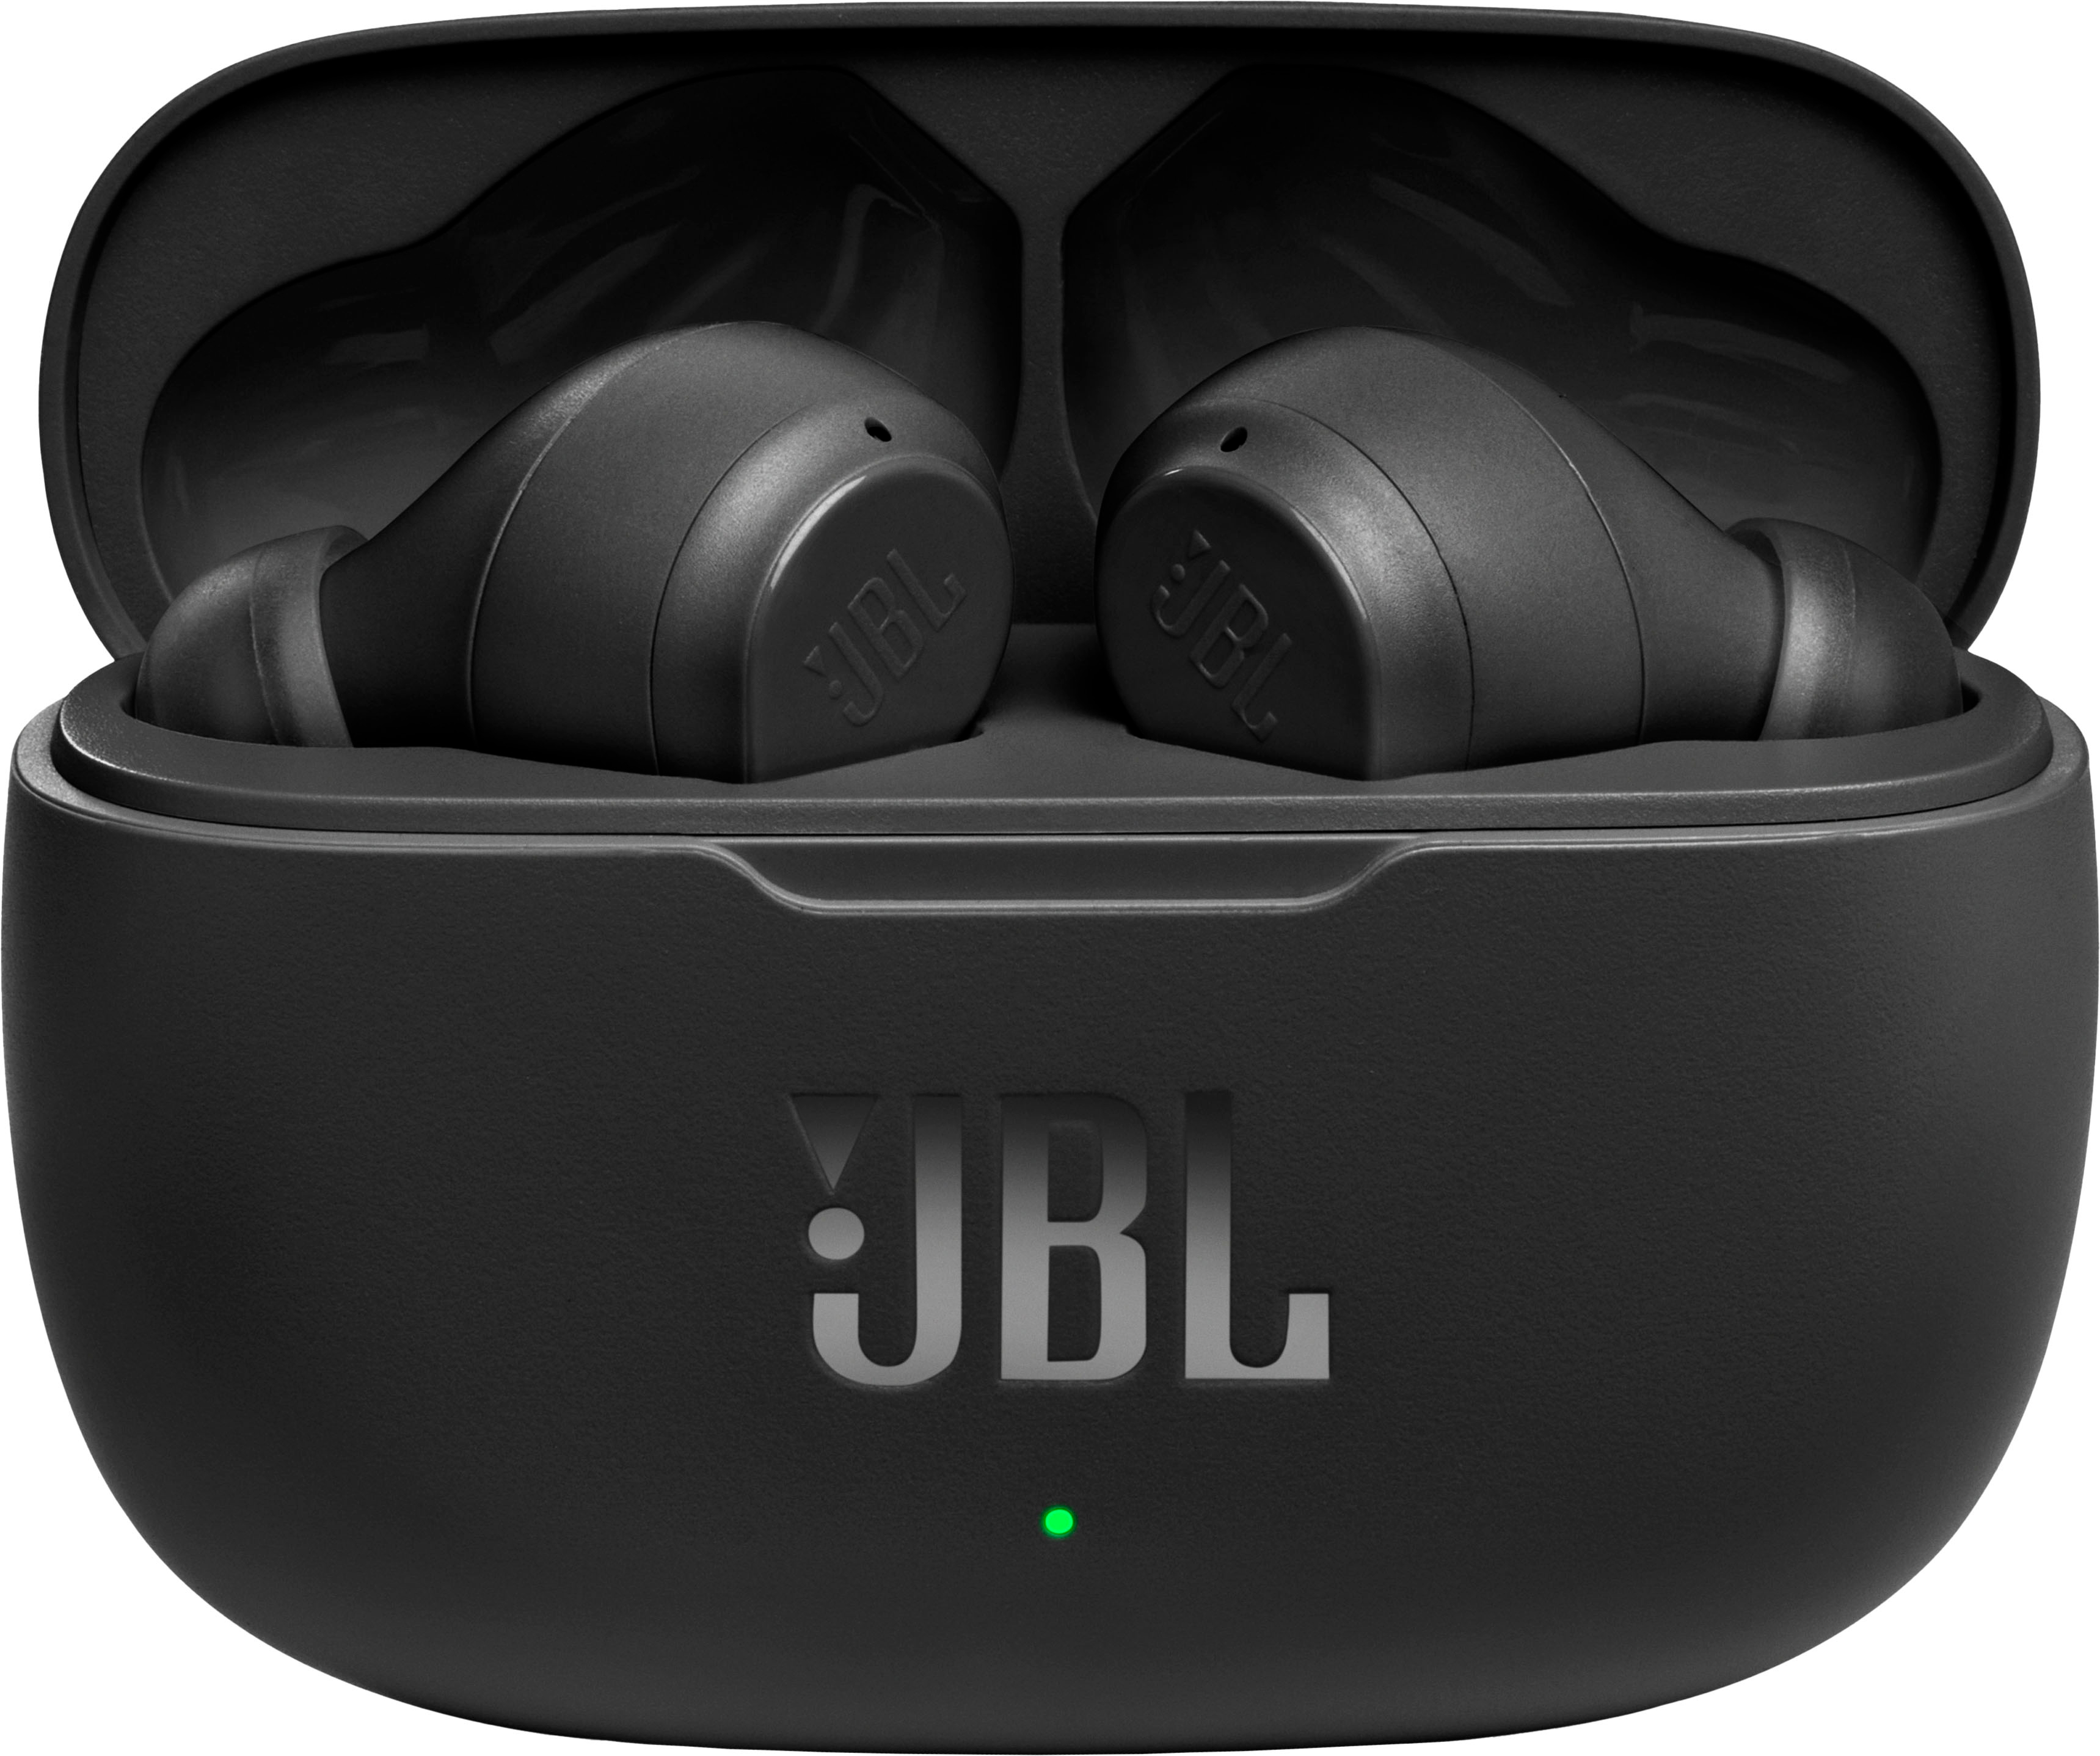 gezond verstand Purper maïs JBL Vibe 200 True Wireless Earbuds Black JBLV200TWSBLKAM - Best Buy